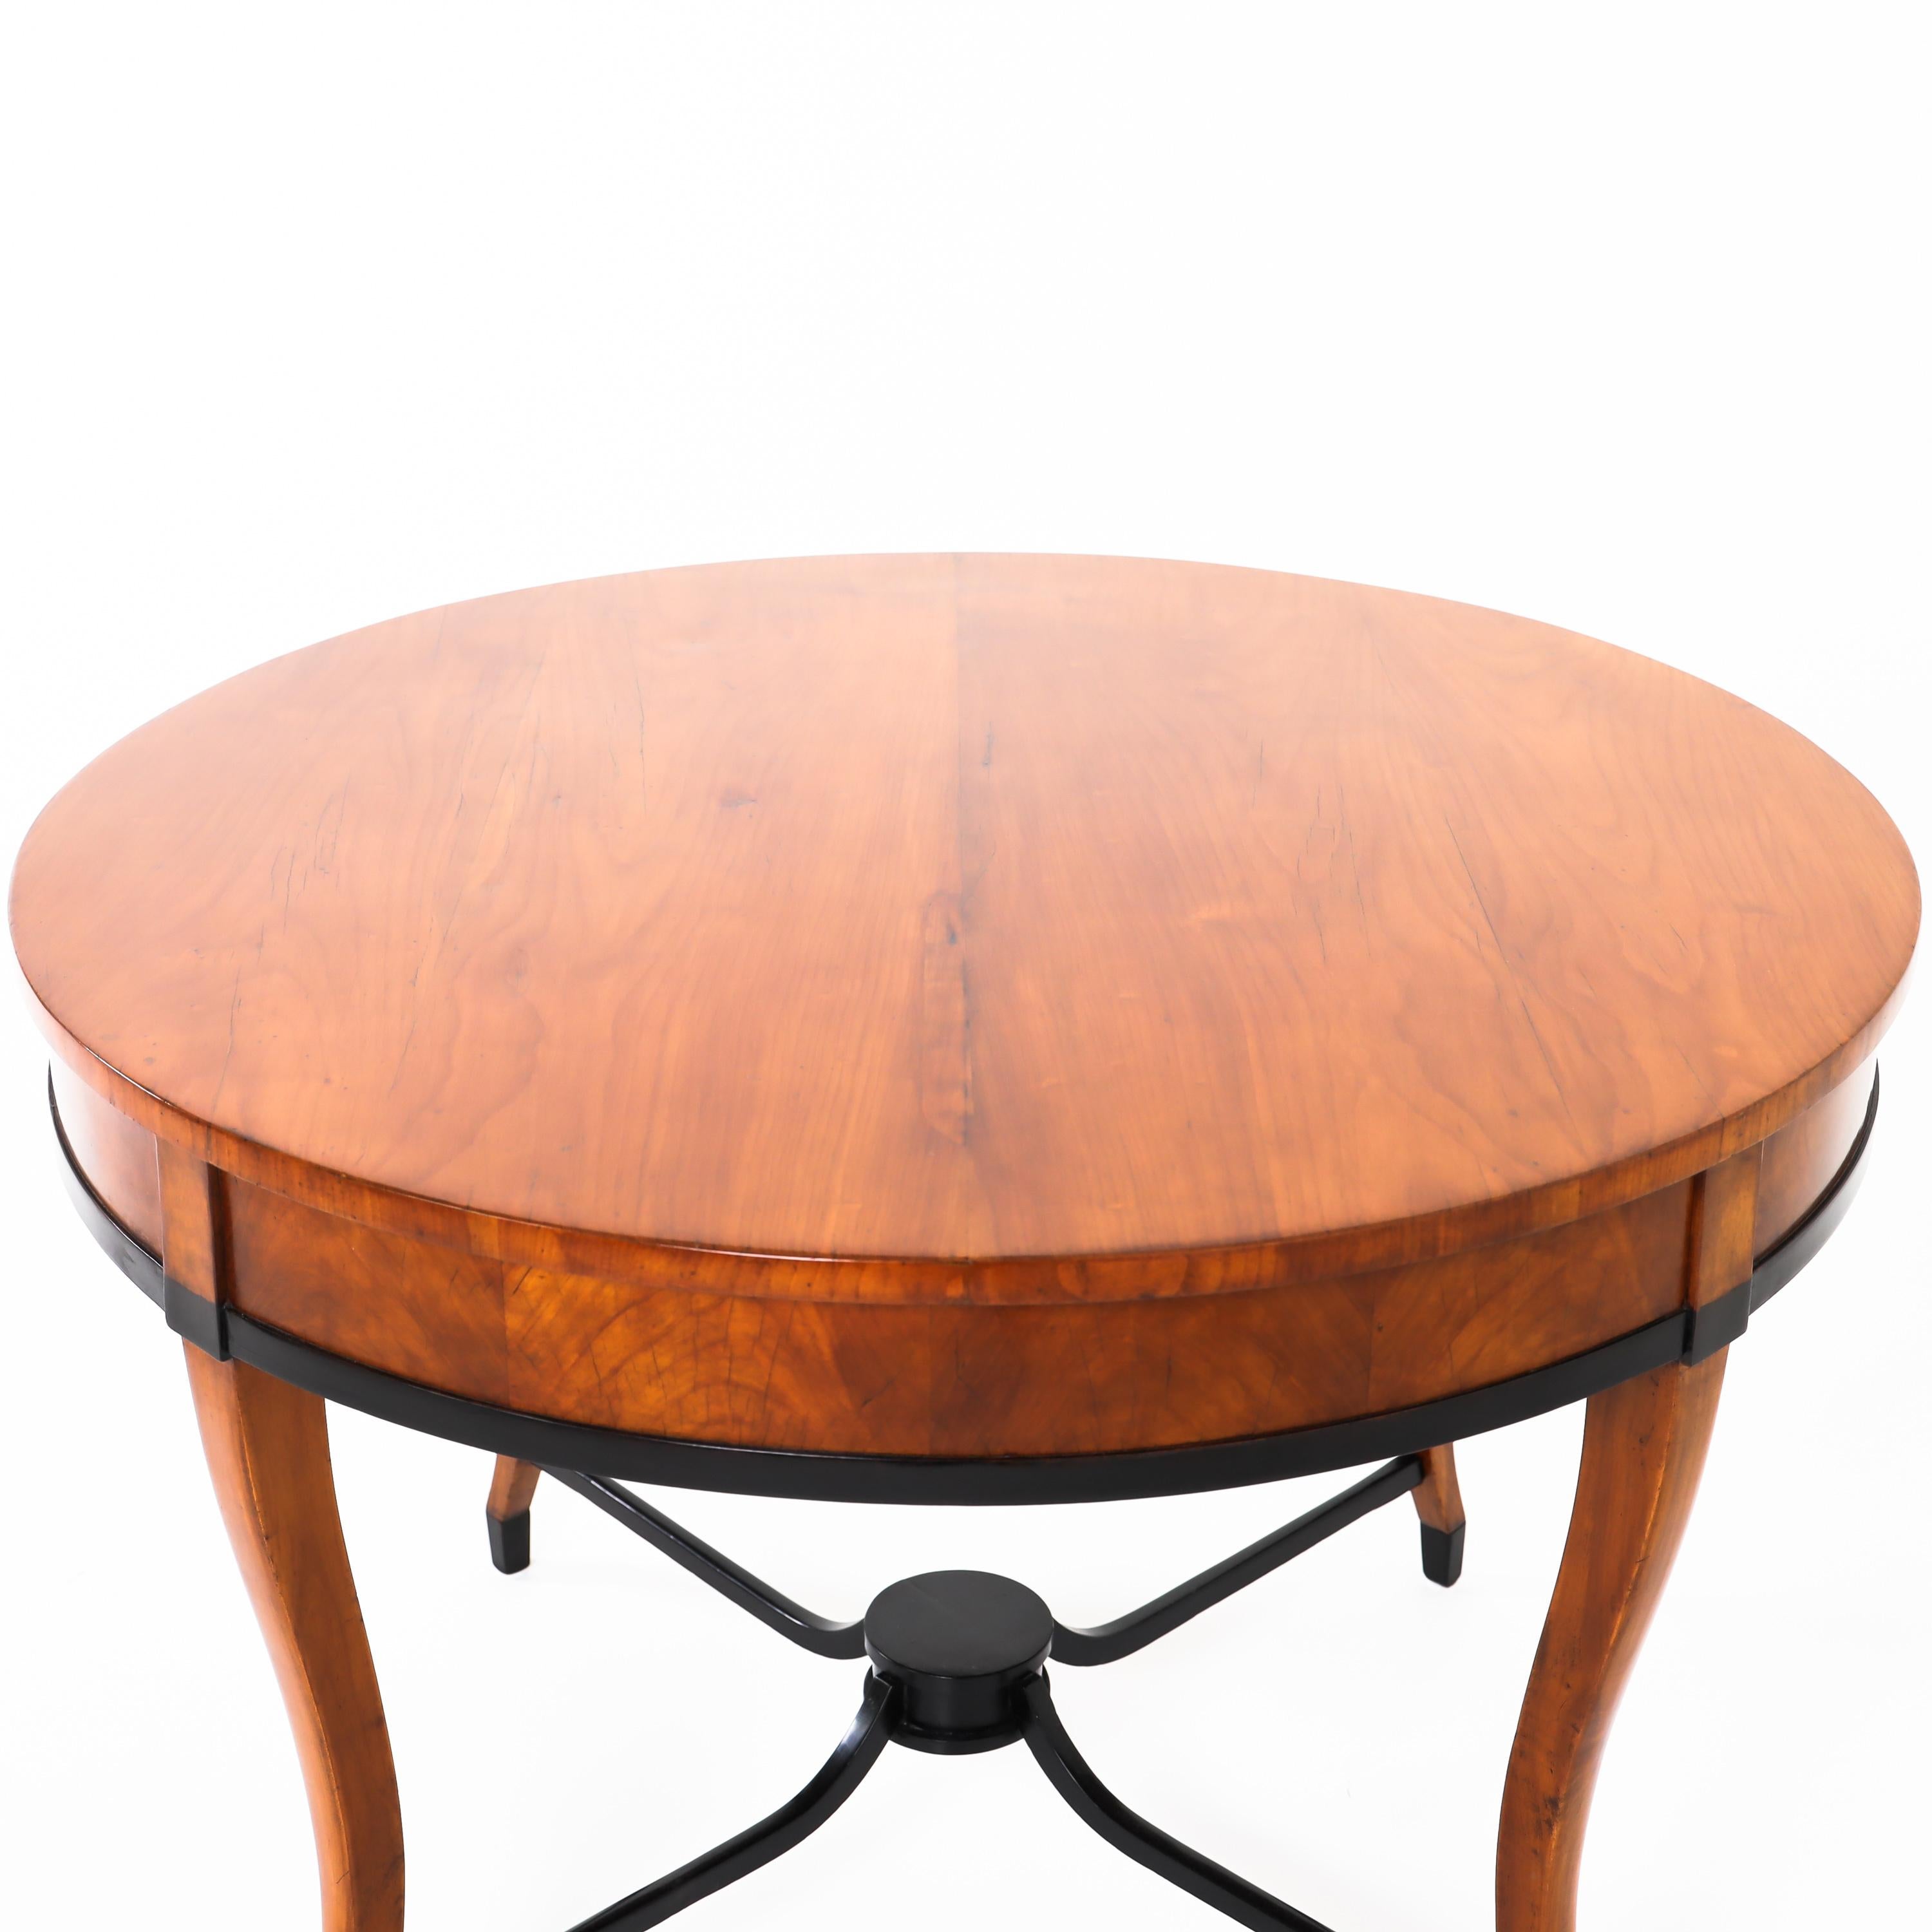 Biedermeier salon table in cherry with ebonized bracing. The s-shaped legs stand on feet also ebonized (recent).